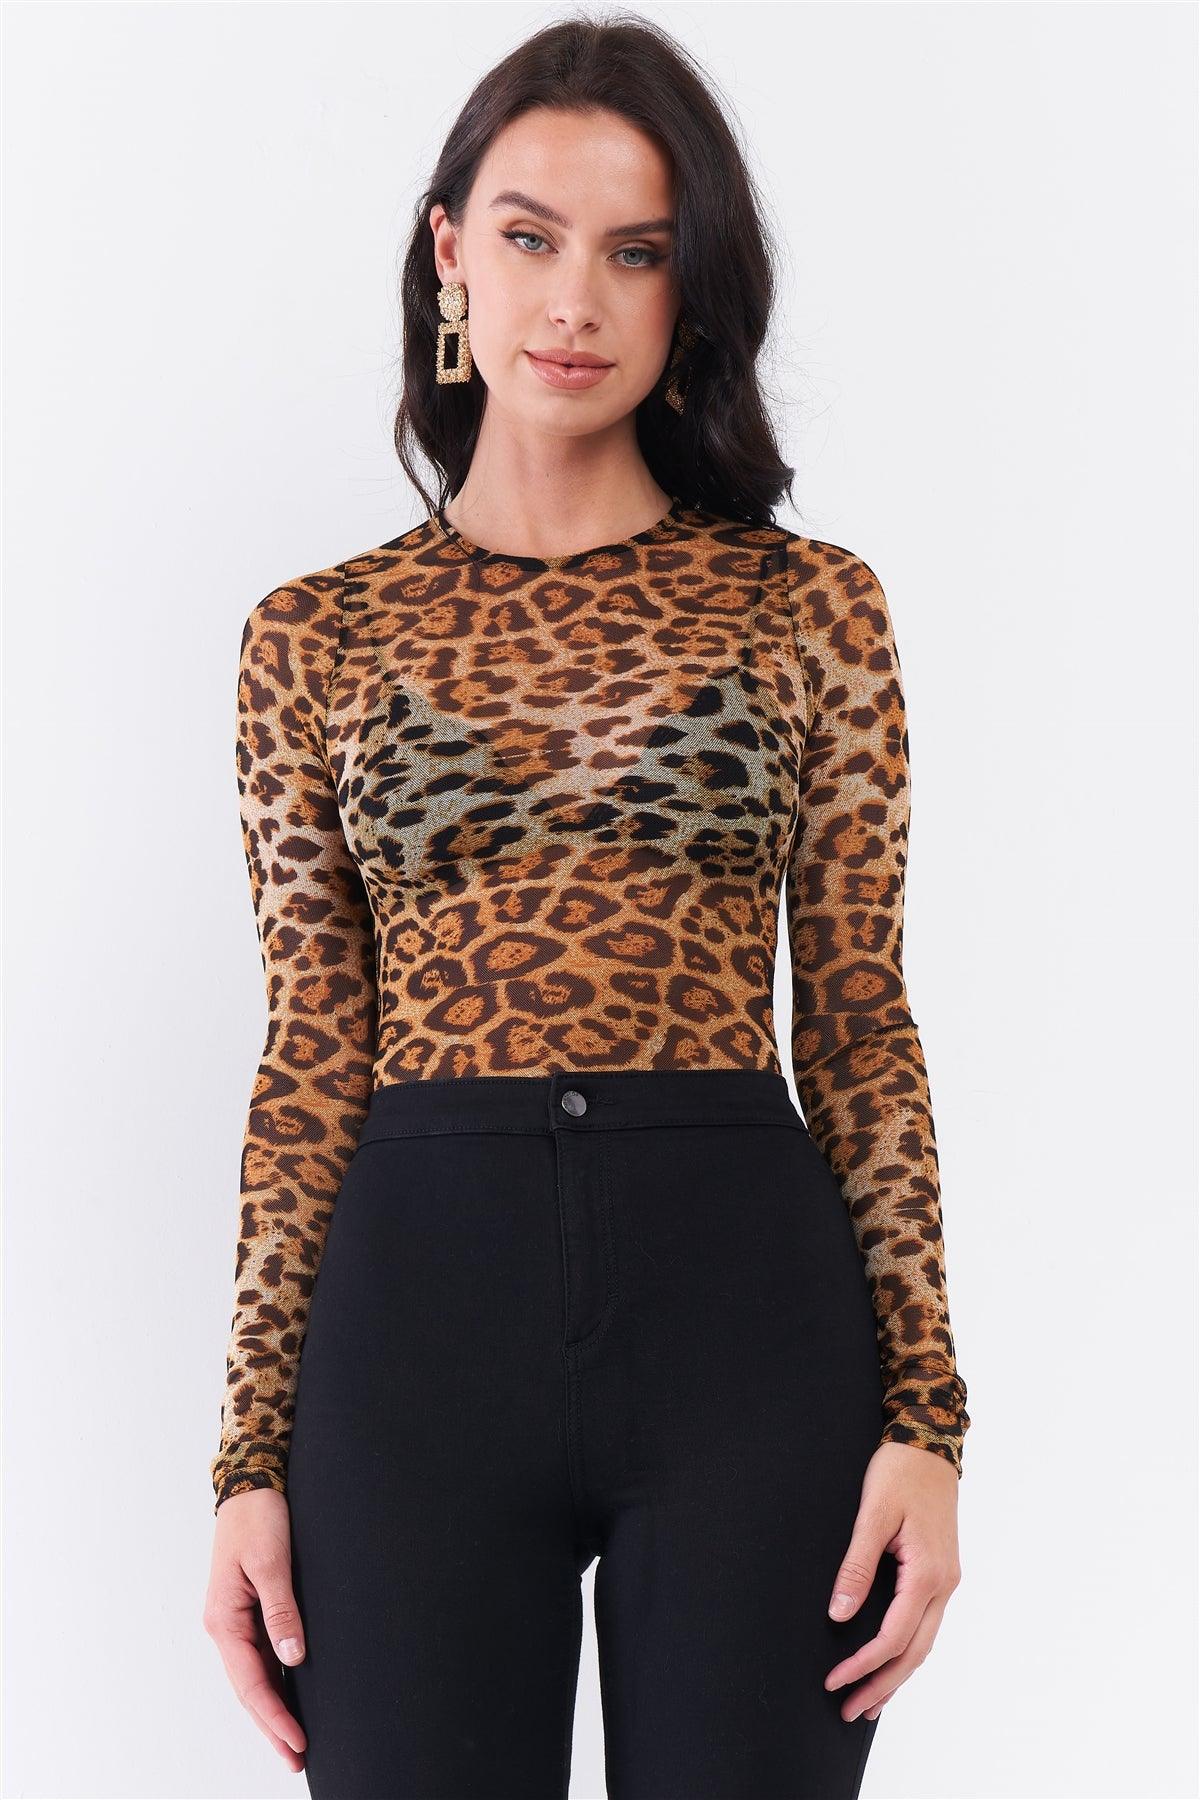 Brown Leopard Print Sheer Mesh Crew Neck Long Sleeve Bodysuit Top - Kreative Passions